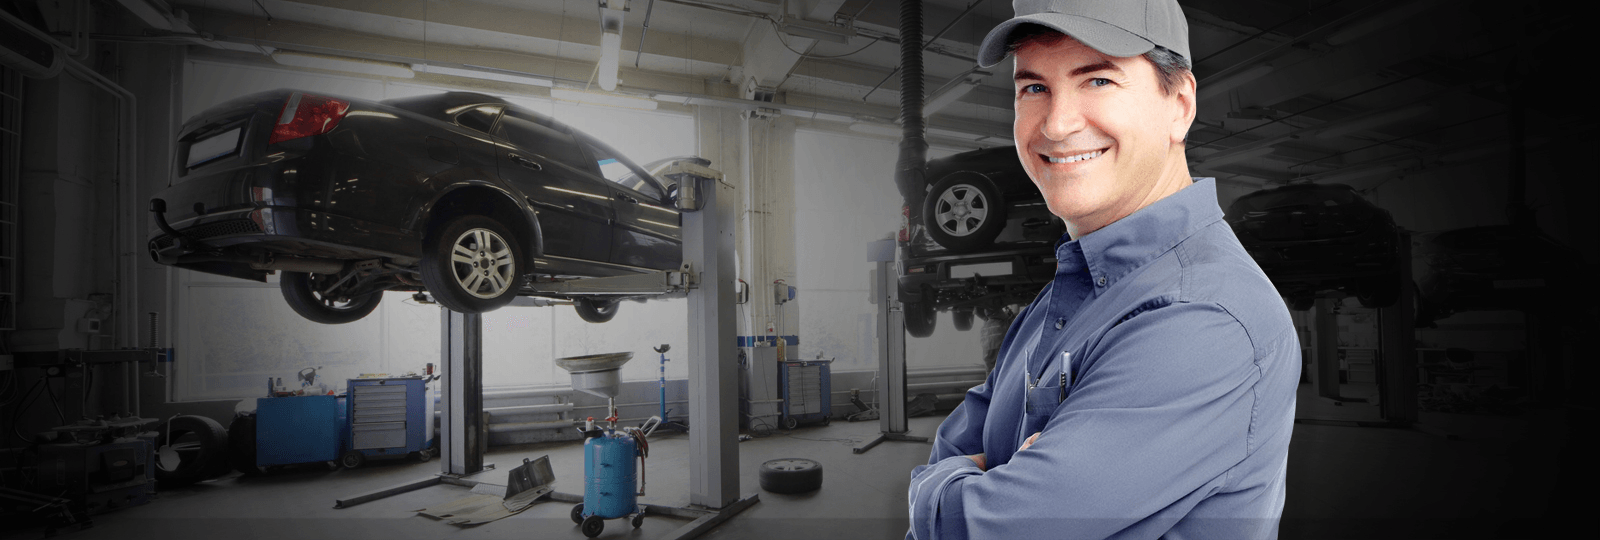 Mechanic repairing car's engine